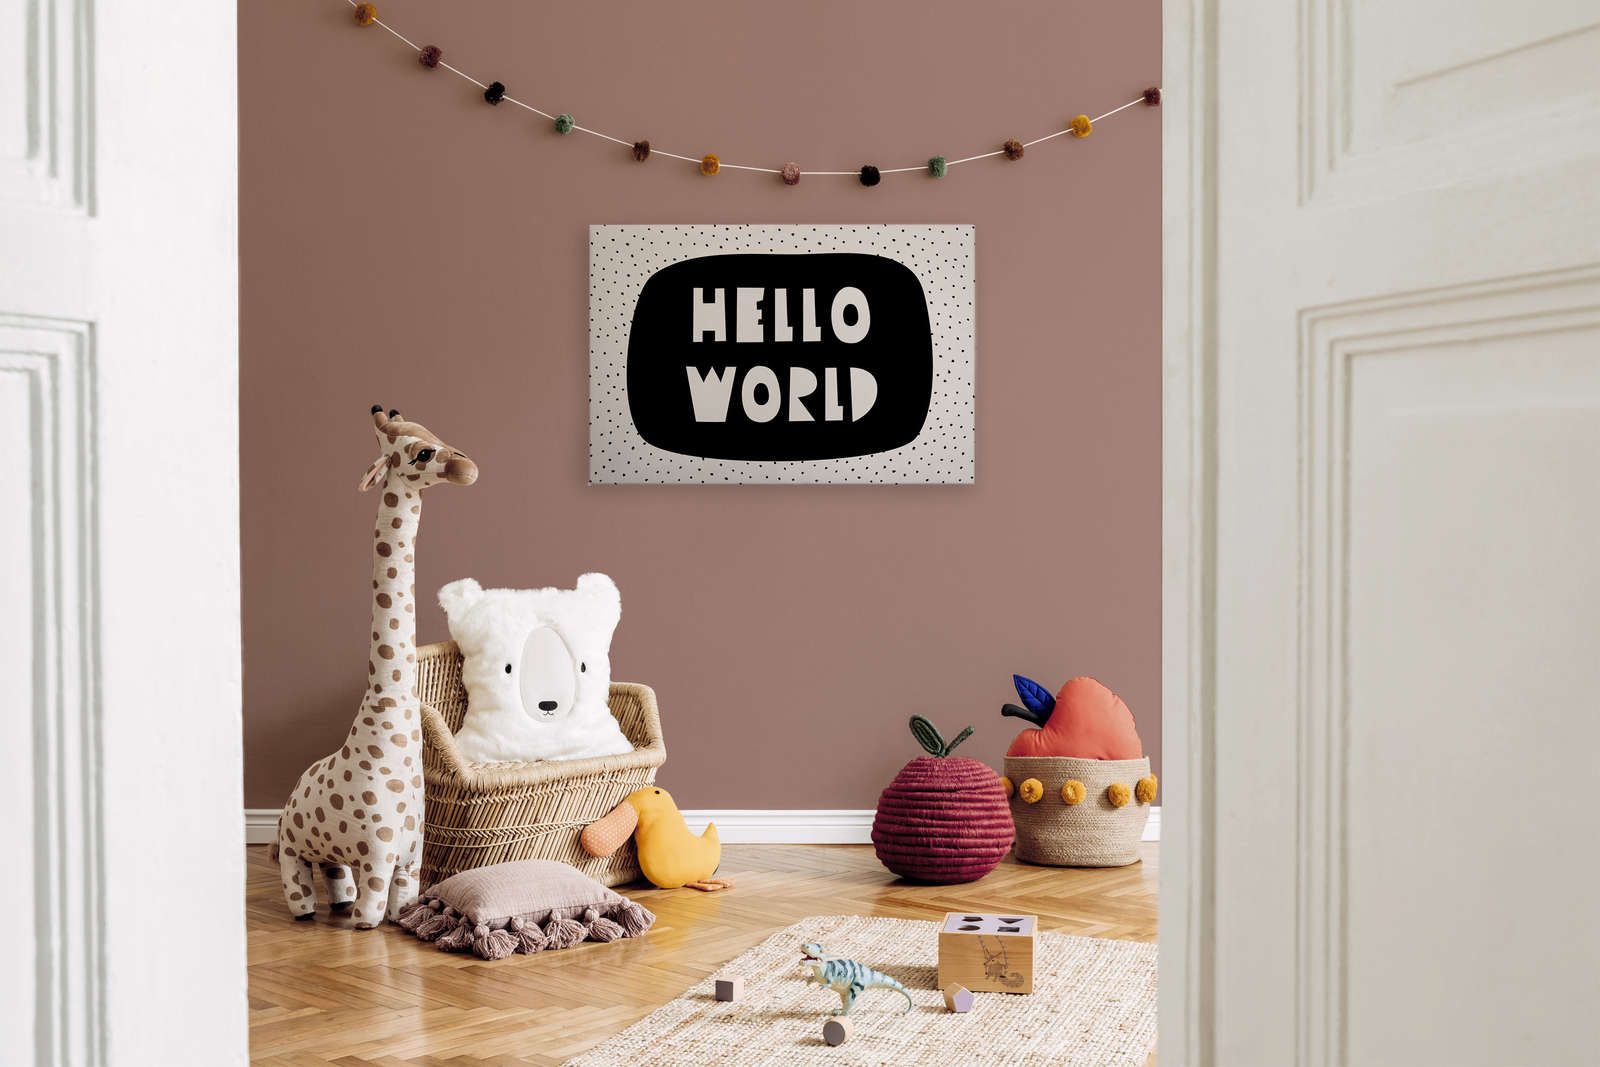             Lienzo para habitación infantil con letras "Hello World" - 90 cm x 60 cm
        